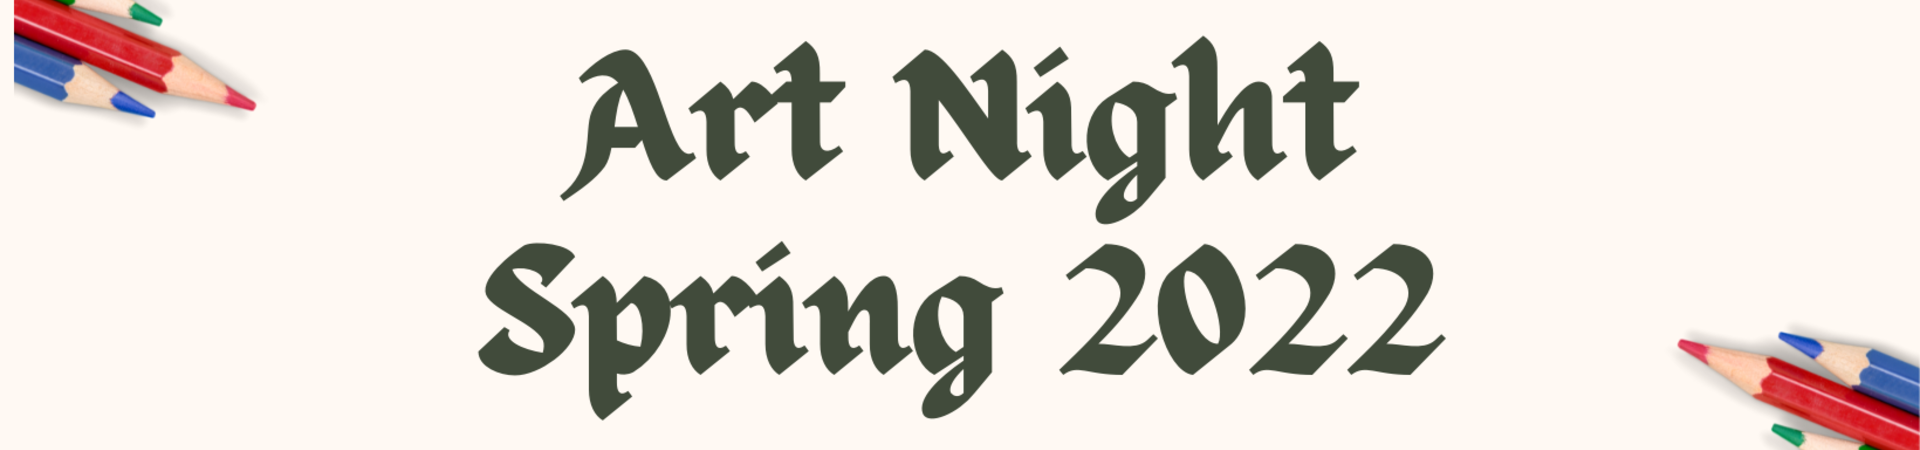 Art Night Spring 2022 